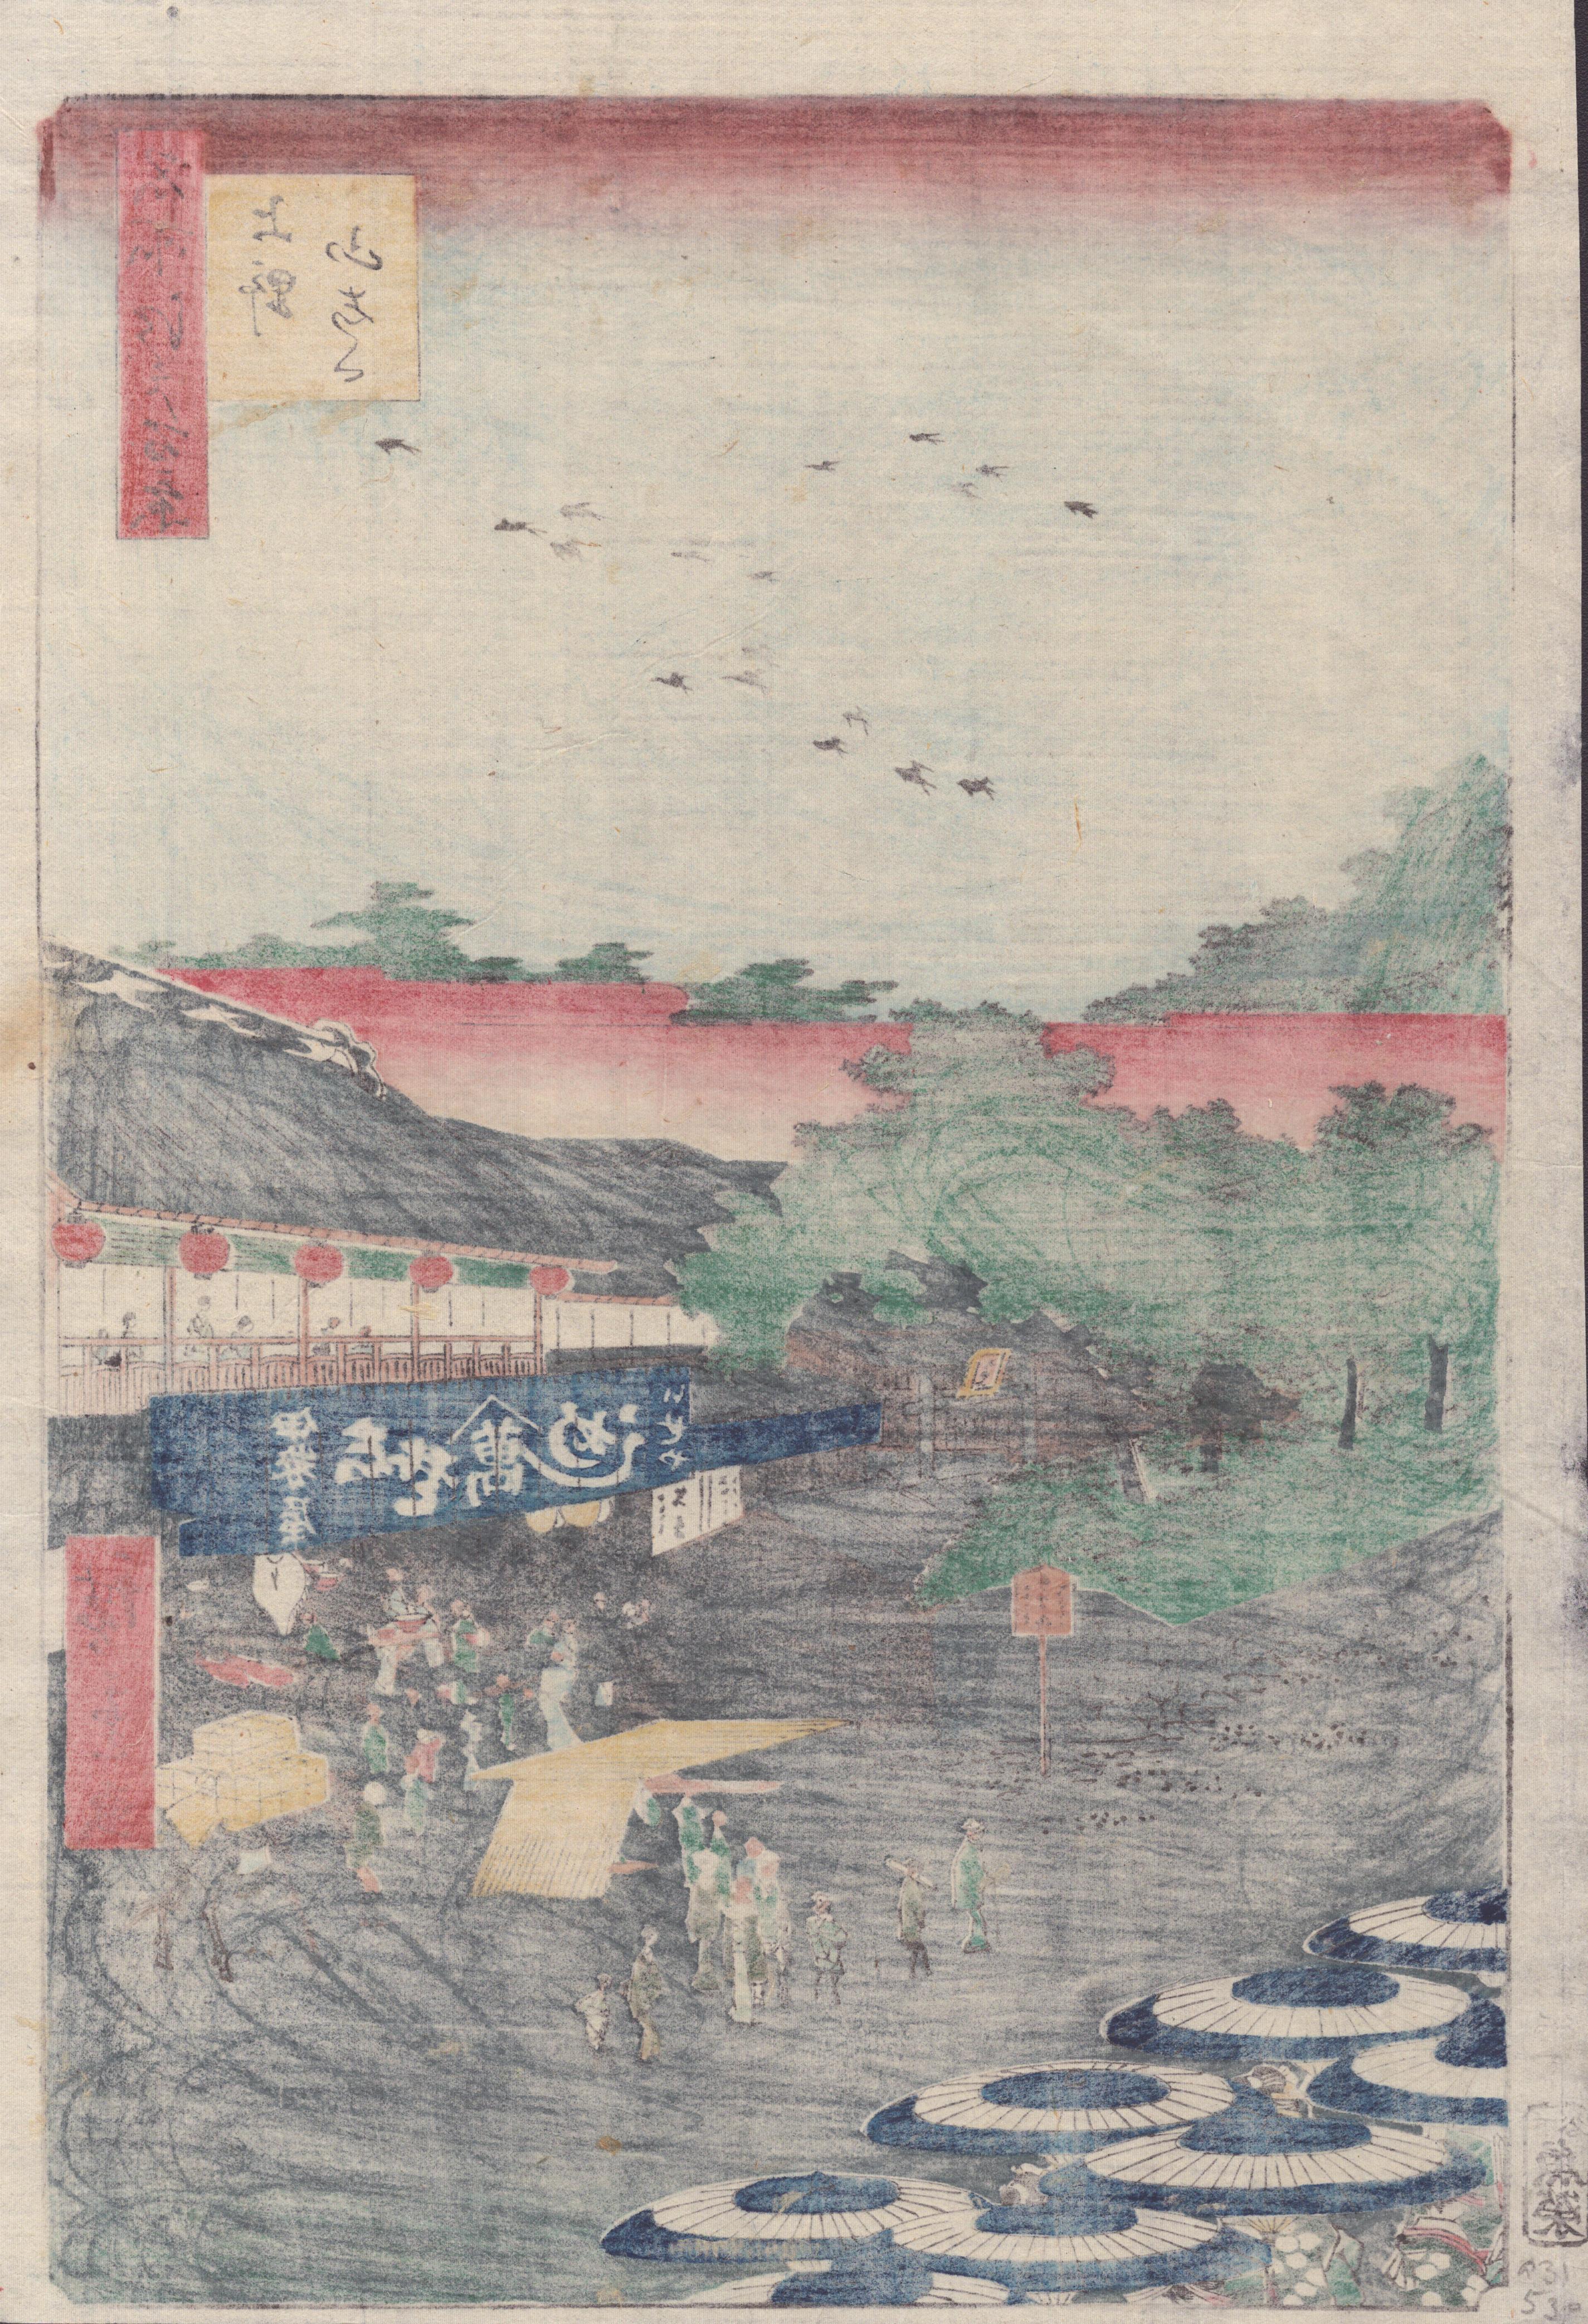 Hiroshige (1797-1858) - Ueno Yamashita  - Print by Utagawa Hiroshige (Ando Hiroshige)